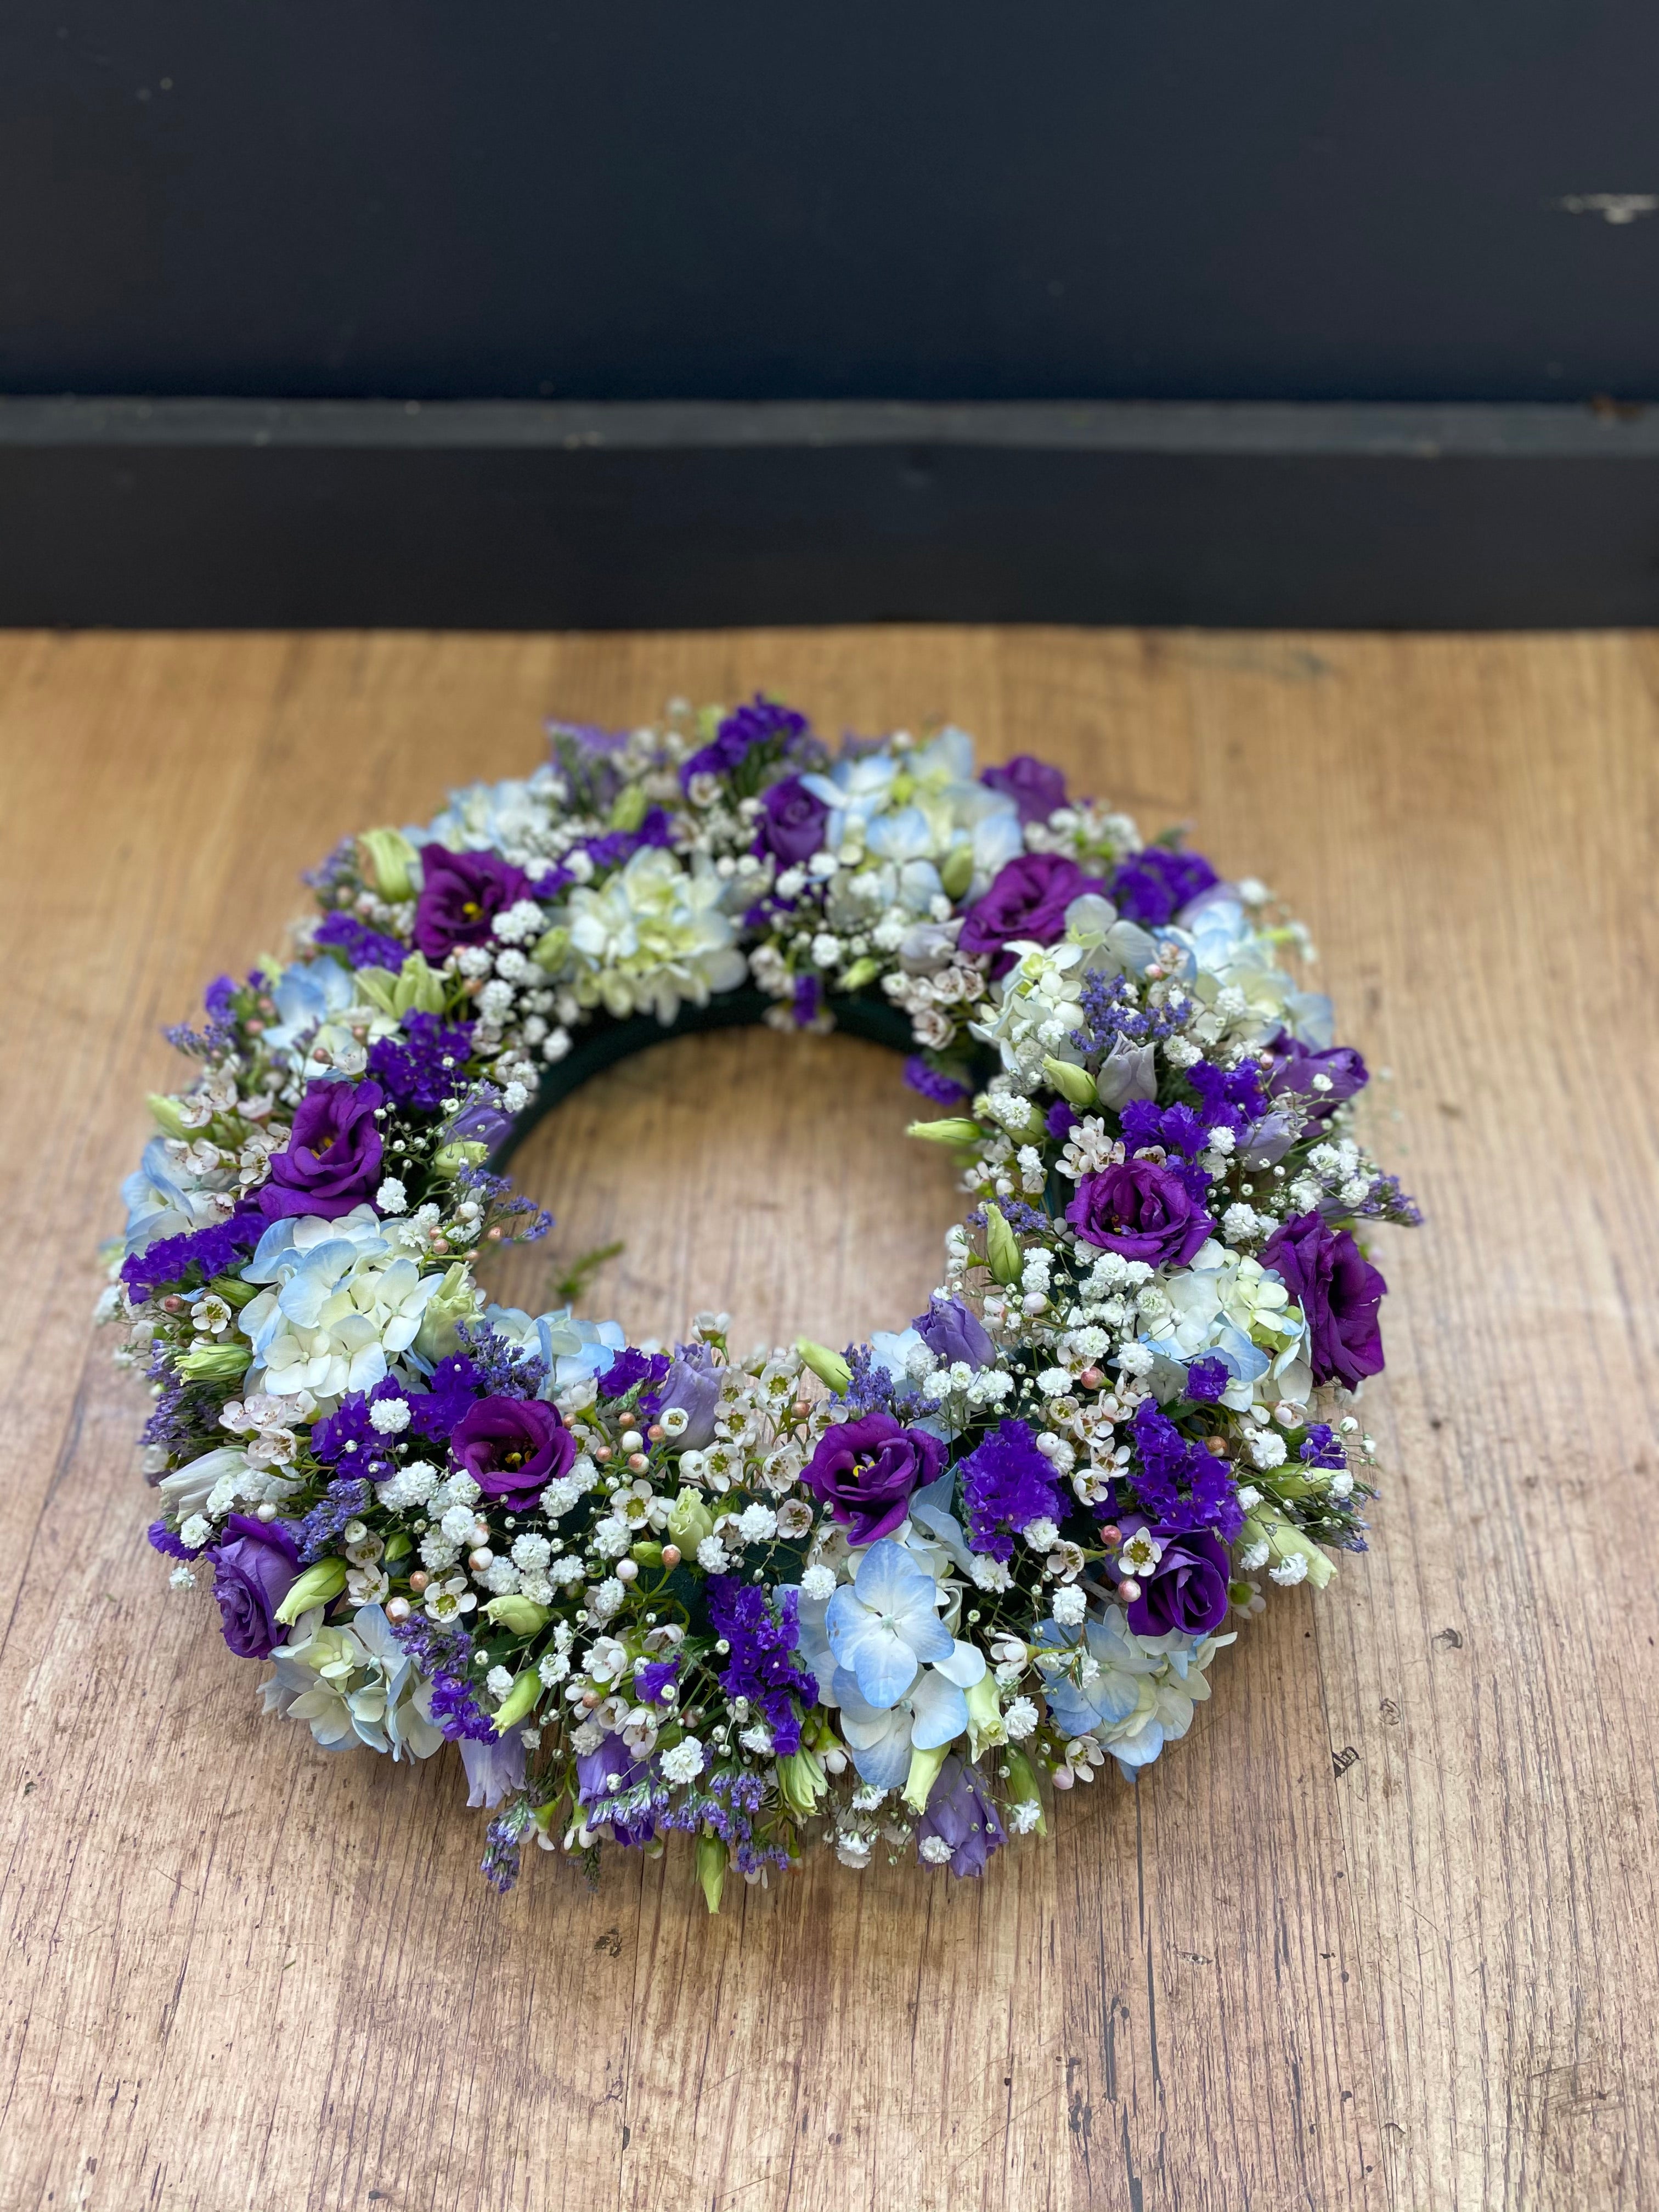 White and Purple wreath